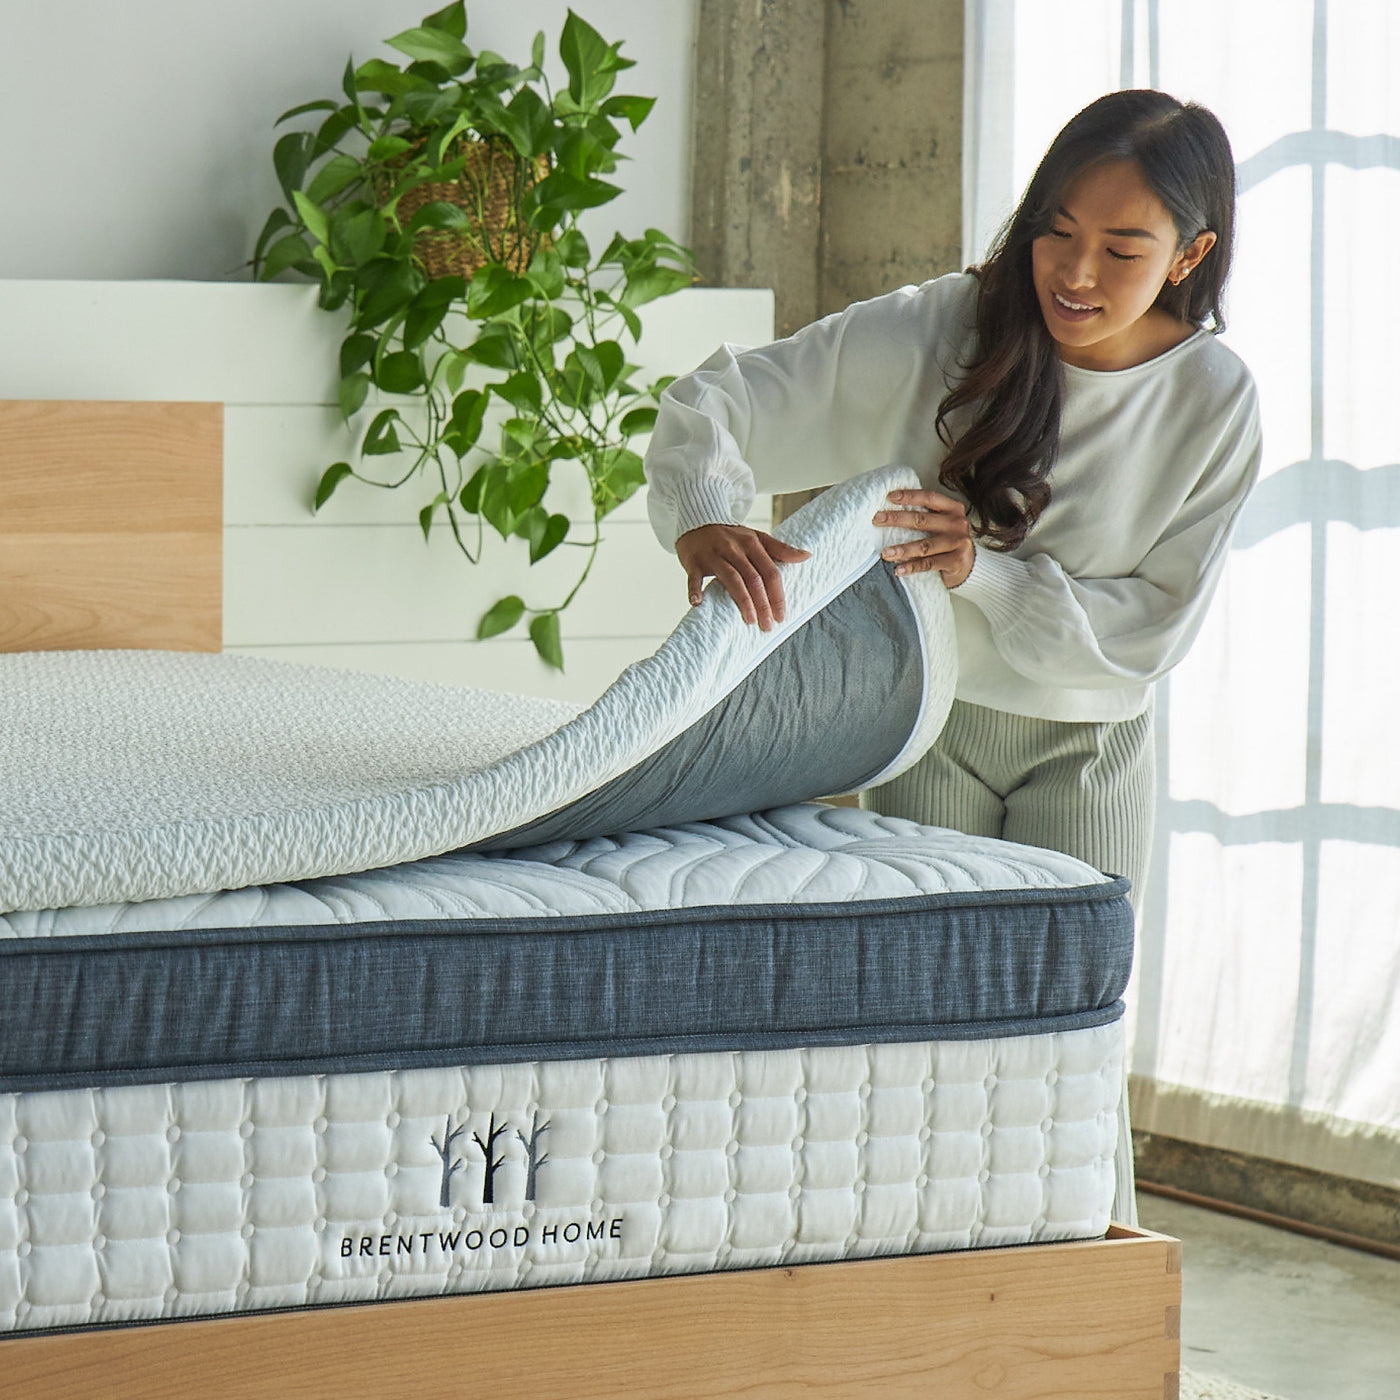 Why you need a memory foam mattress topper?